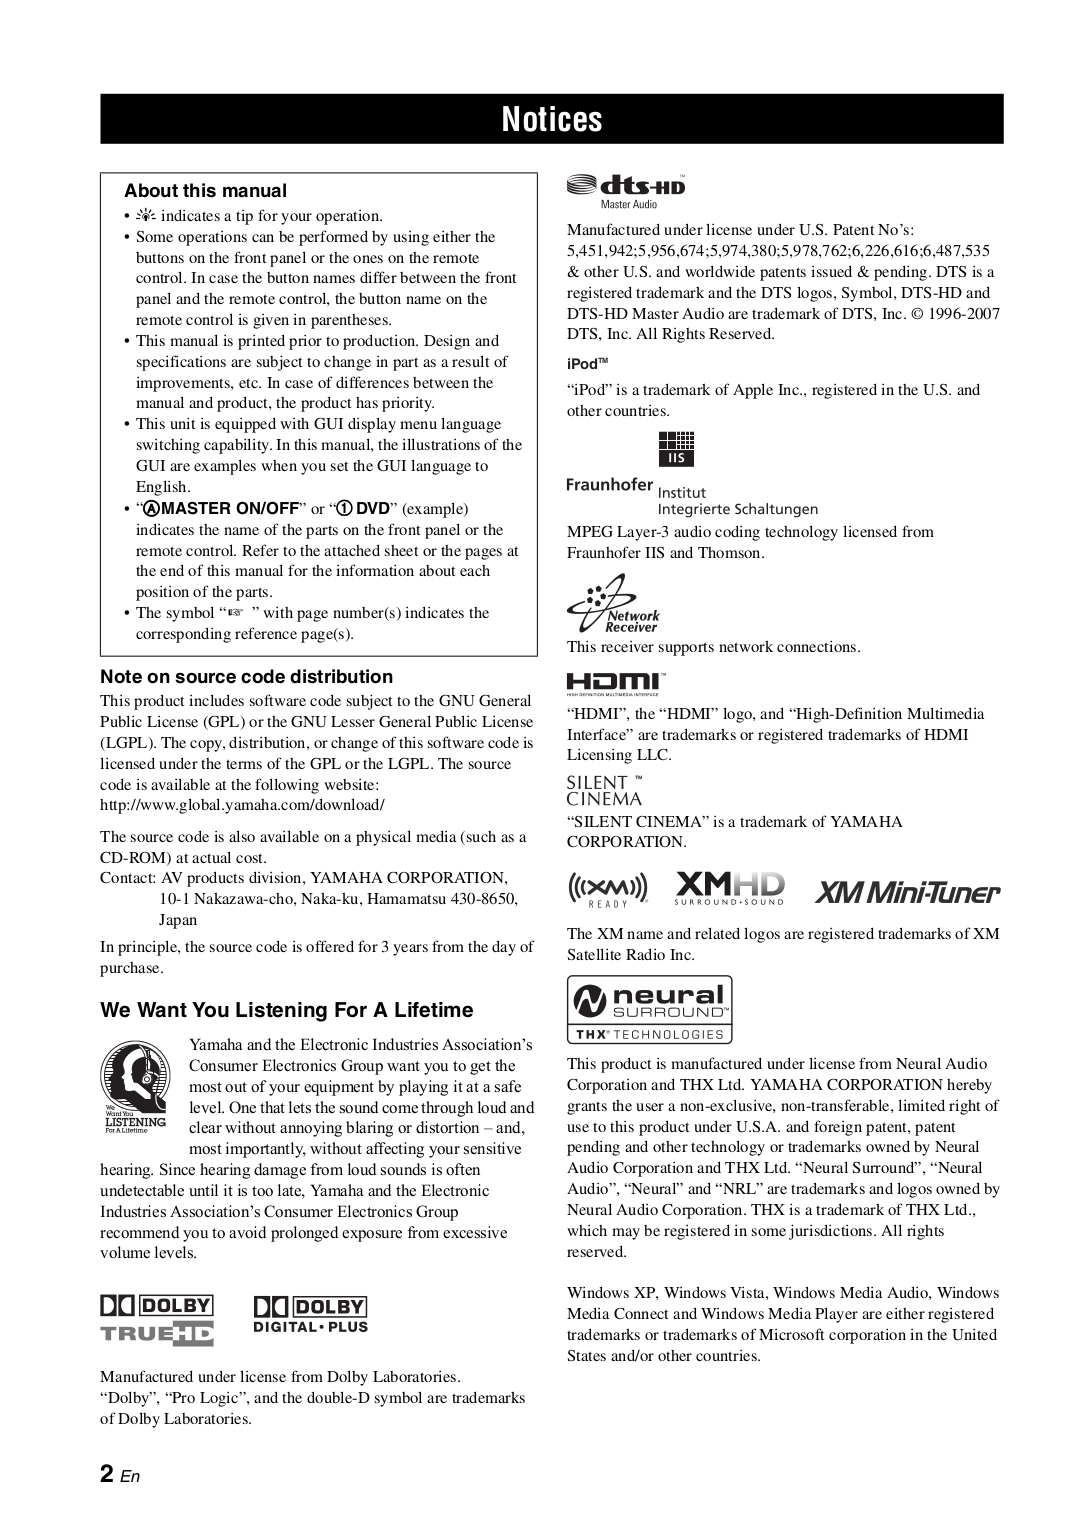 PDF manual for Yamaha Receiver RX-V3800